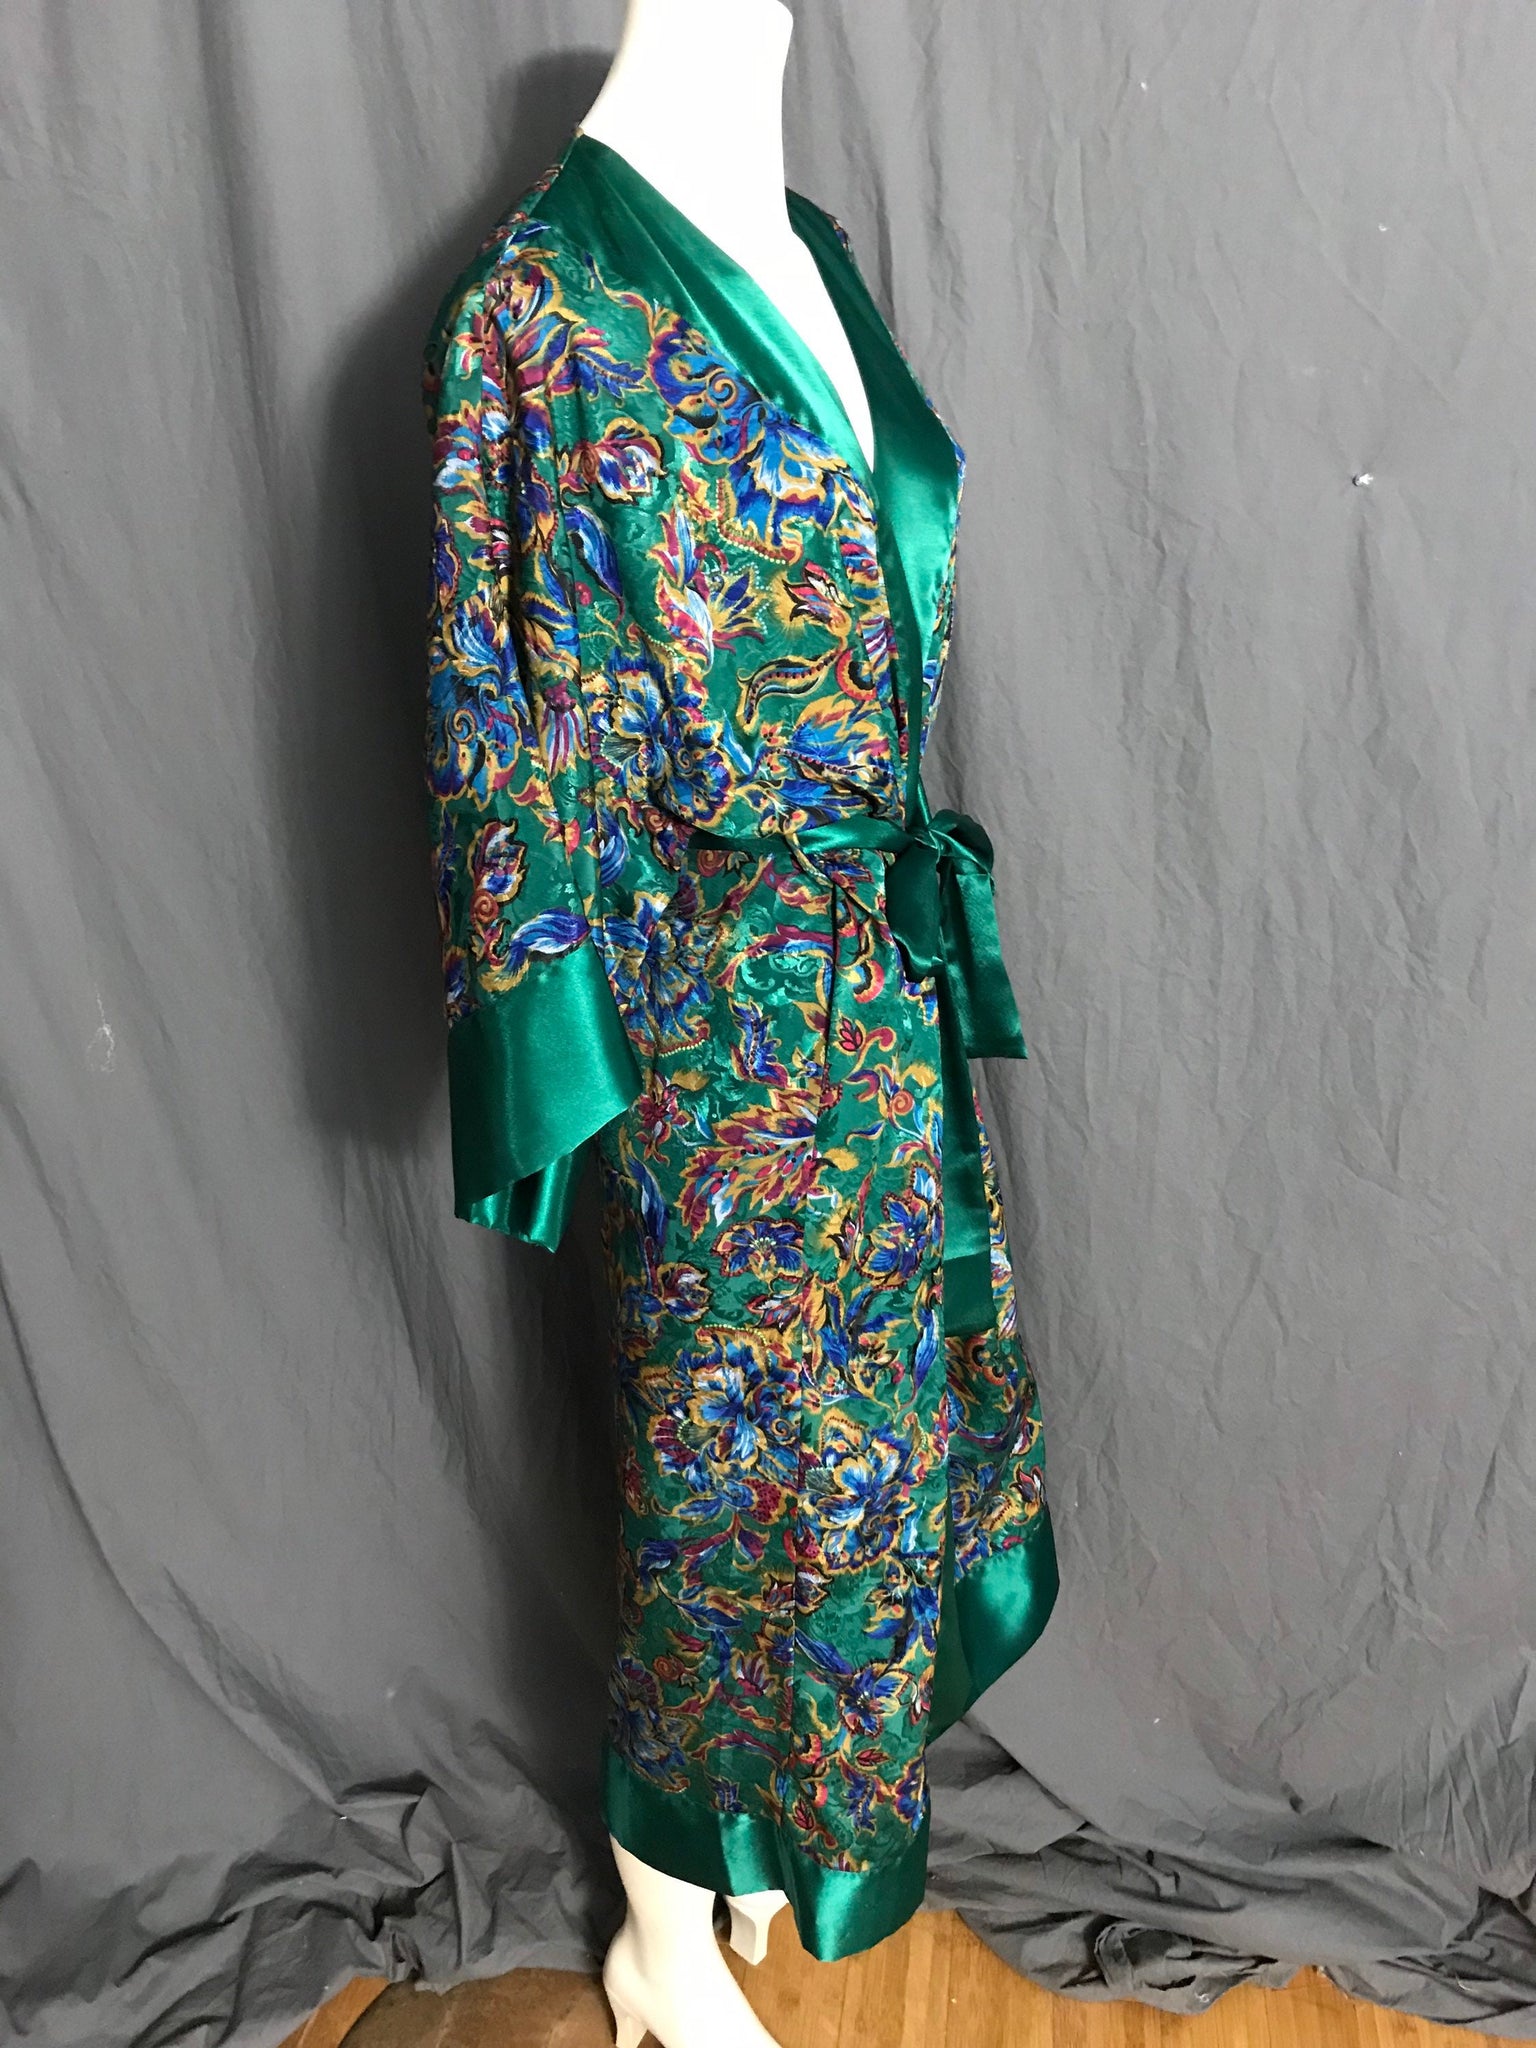 Vintage Victoria’s Secret green floral robe P/S